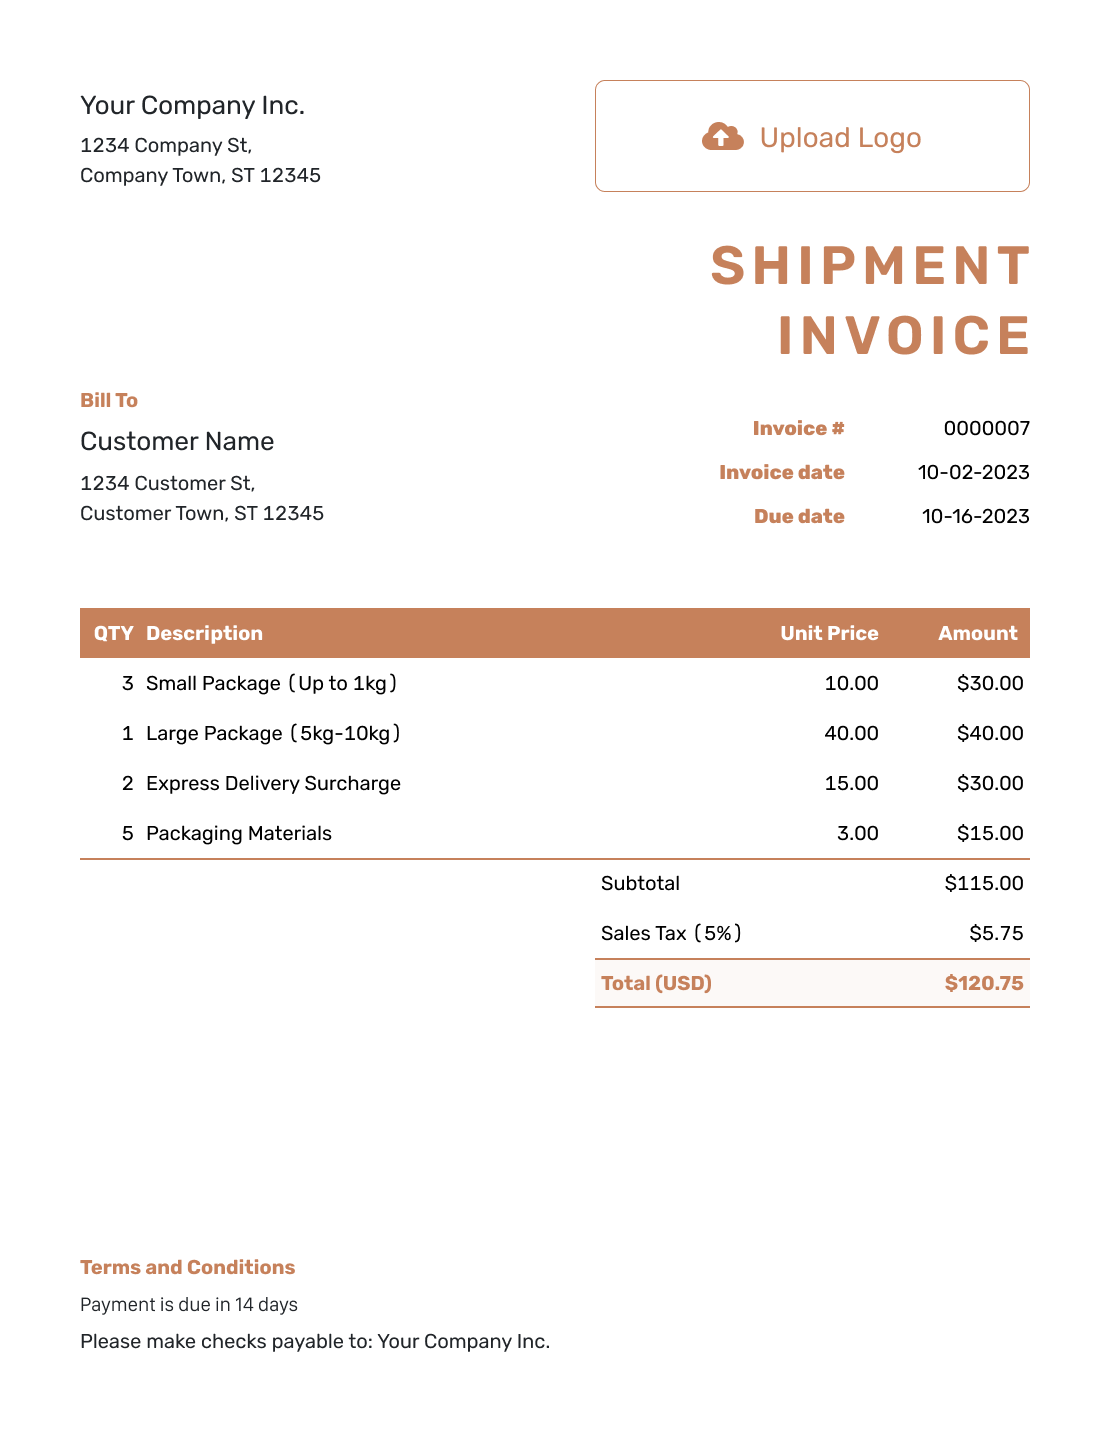 Standard Shipment Invoice Template